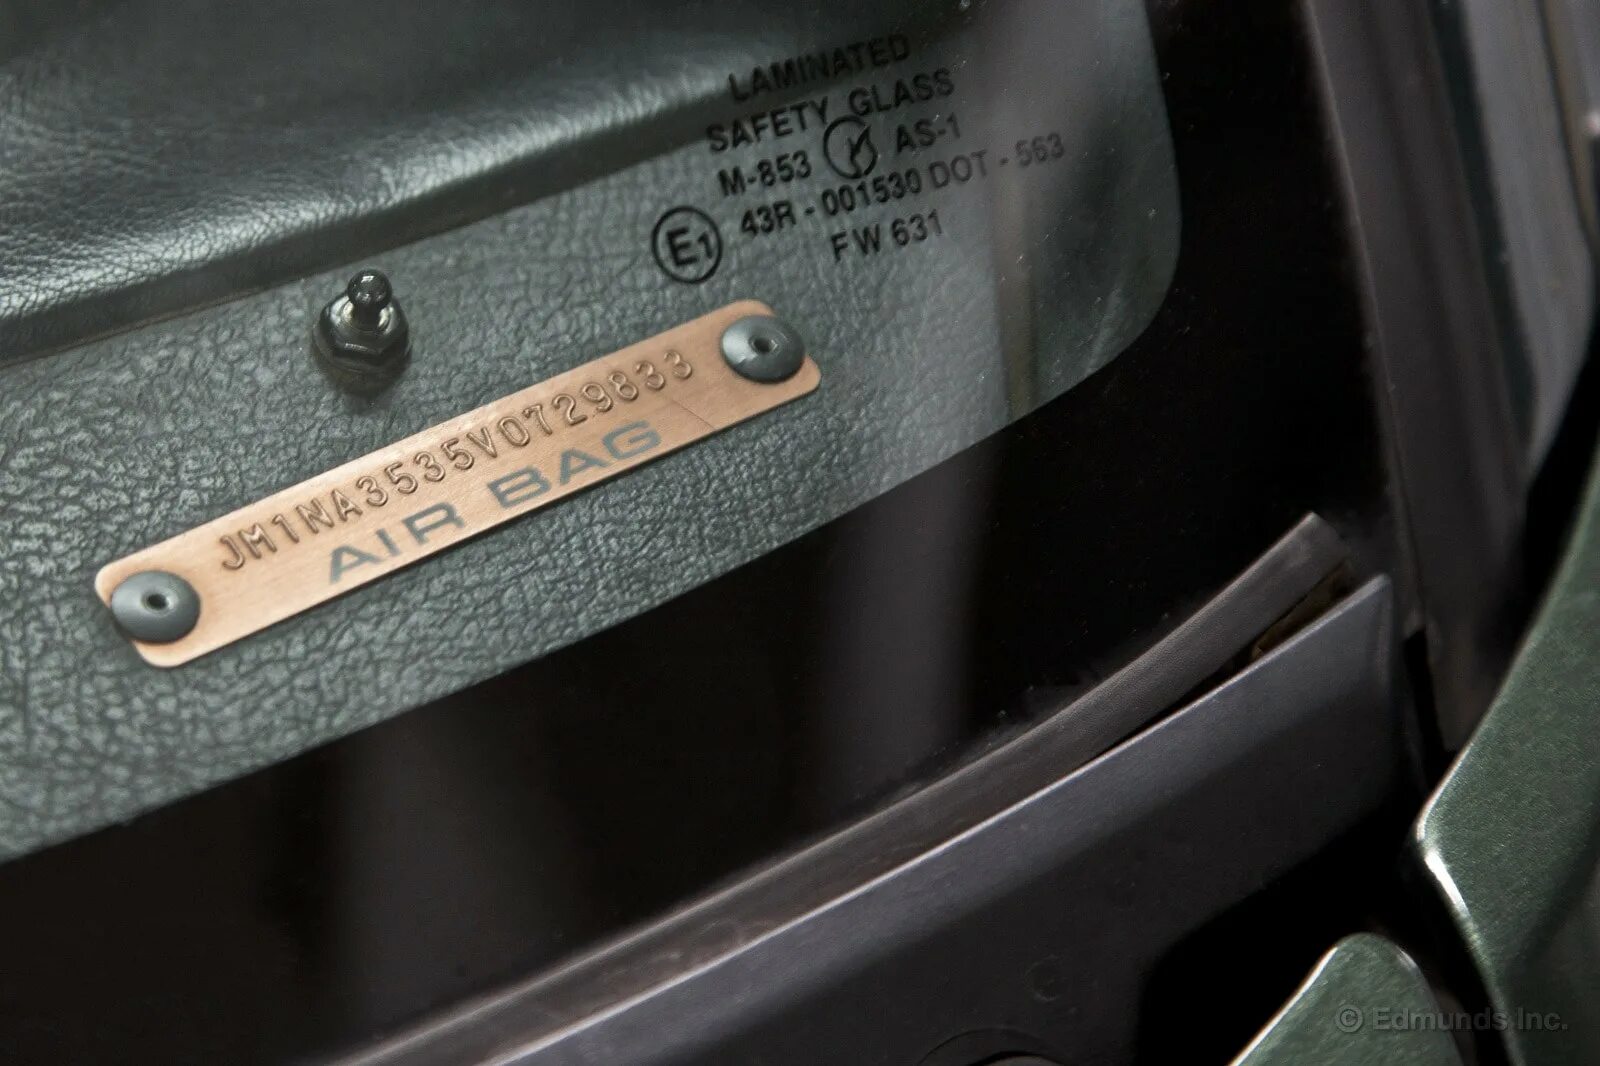 Vin код история. Dodge Caravan 3 табличка VIN. Volkswagen Passat, 2008 табличка с вин номером. Вин Крайслер 300с под стеклом. VIN номер кузова Мерседес 166.